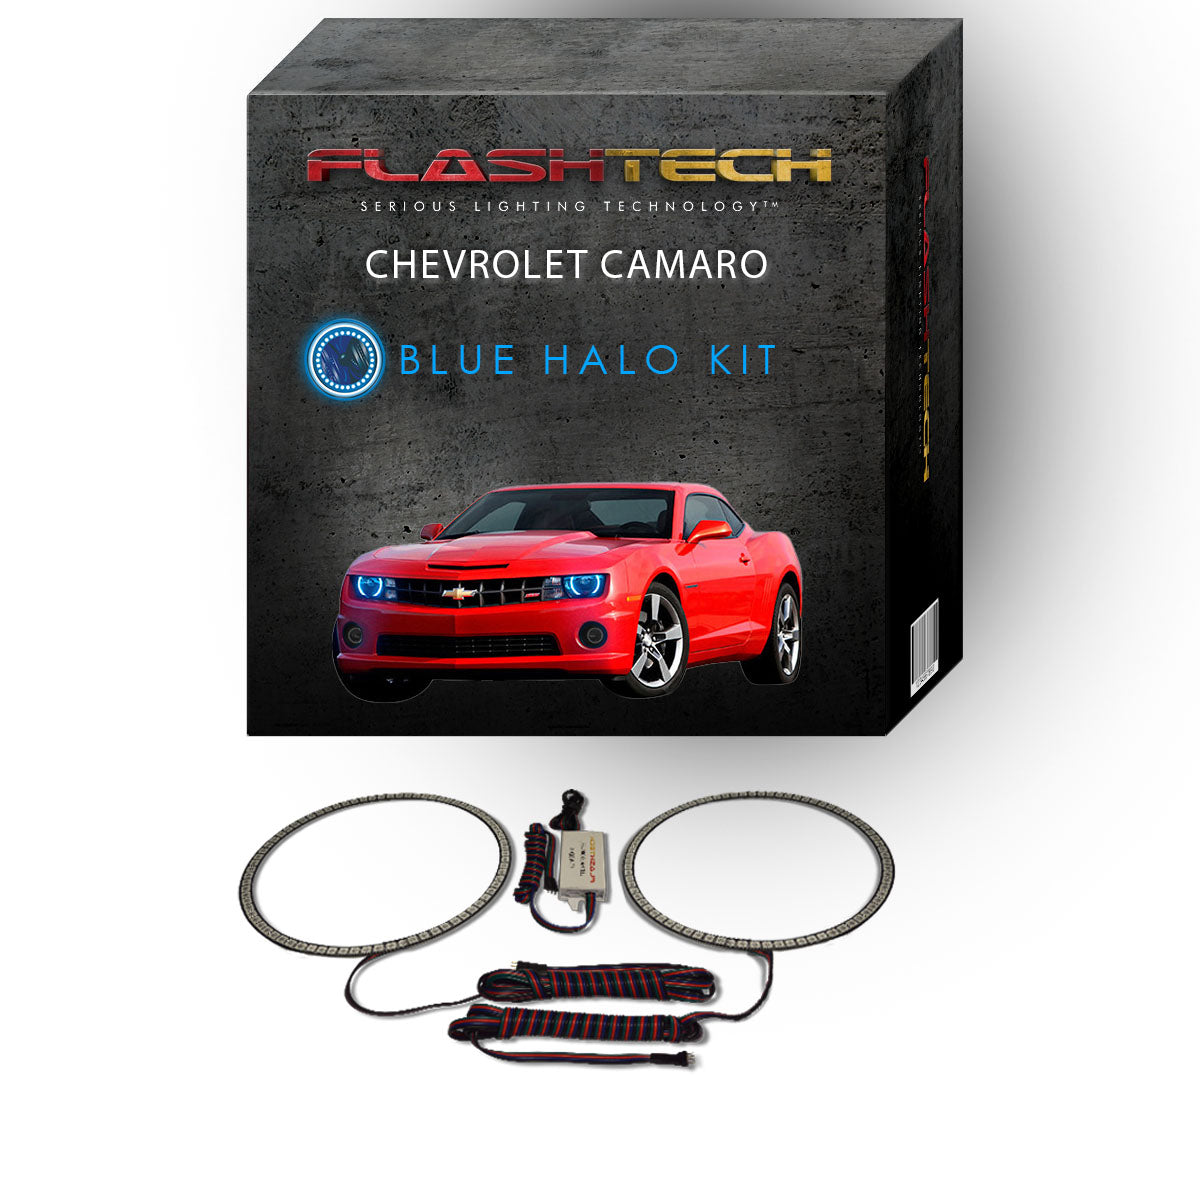 Chevrolet-Camaro-2010, 2011, 2012, 2013-LED-Halo-Headlights-RGB-Bluetooth RF Remote-CY-CANR1013-V3HBTRF